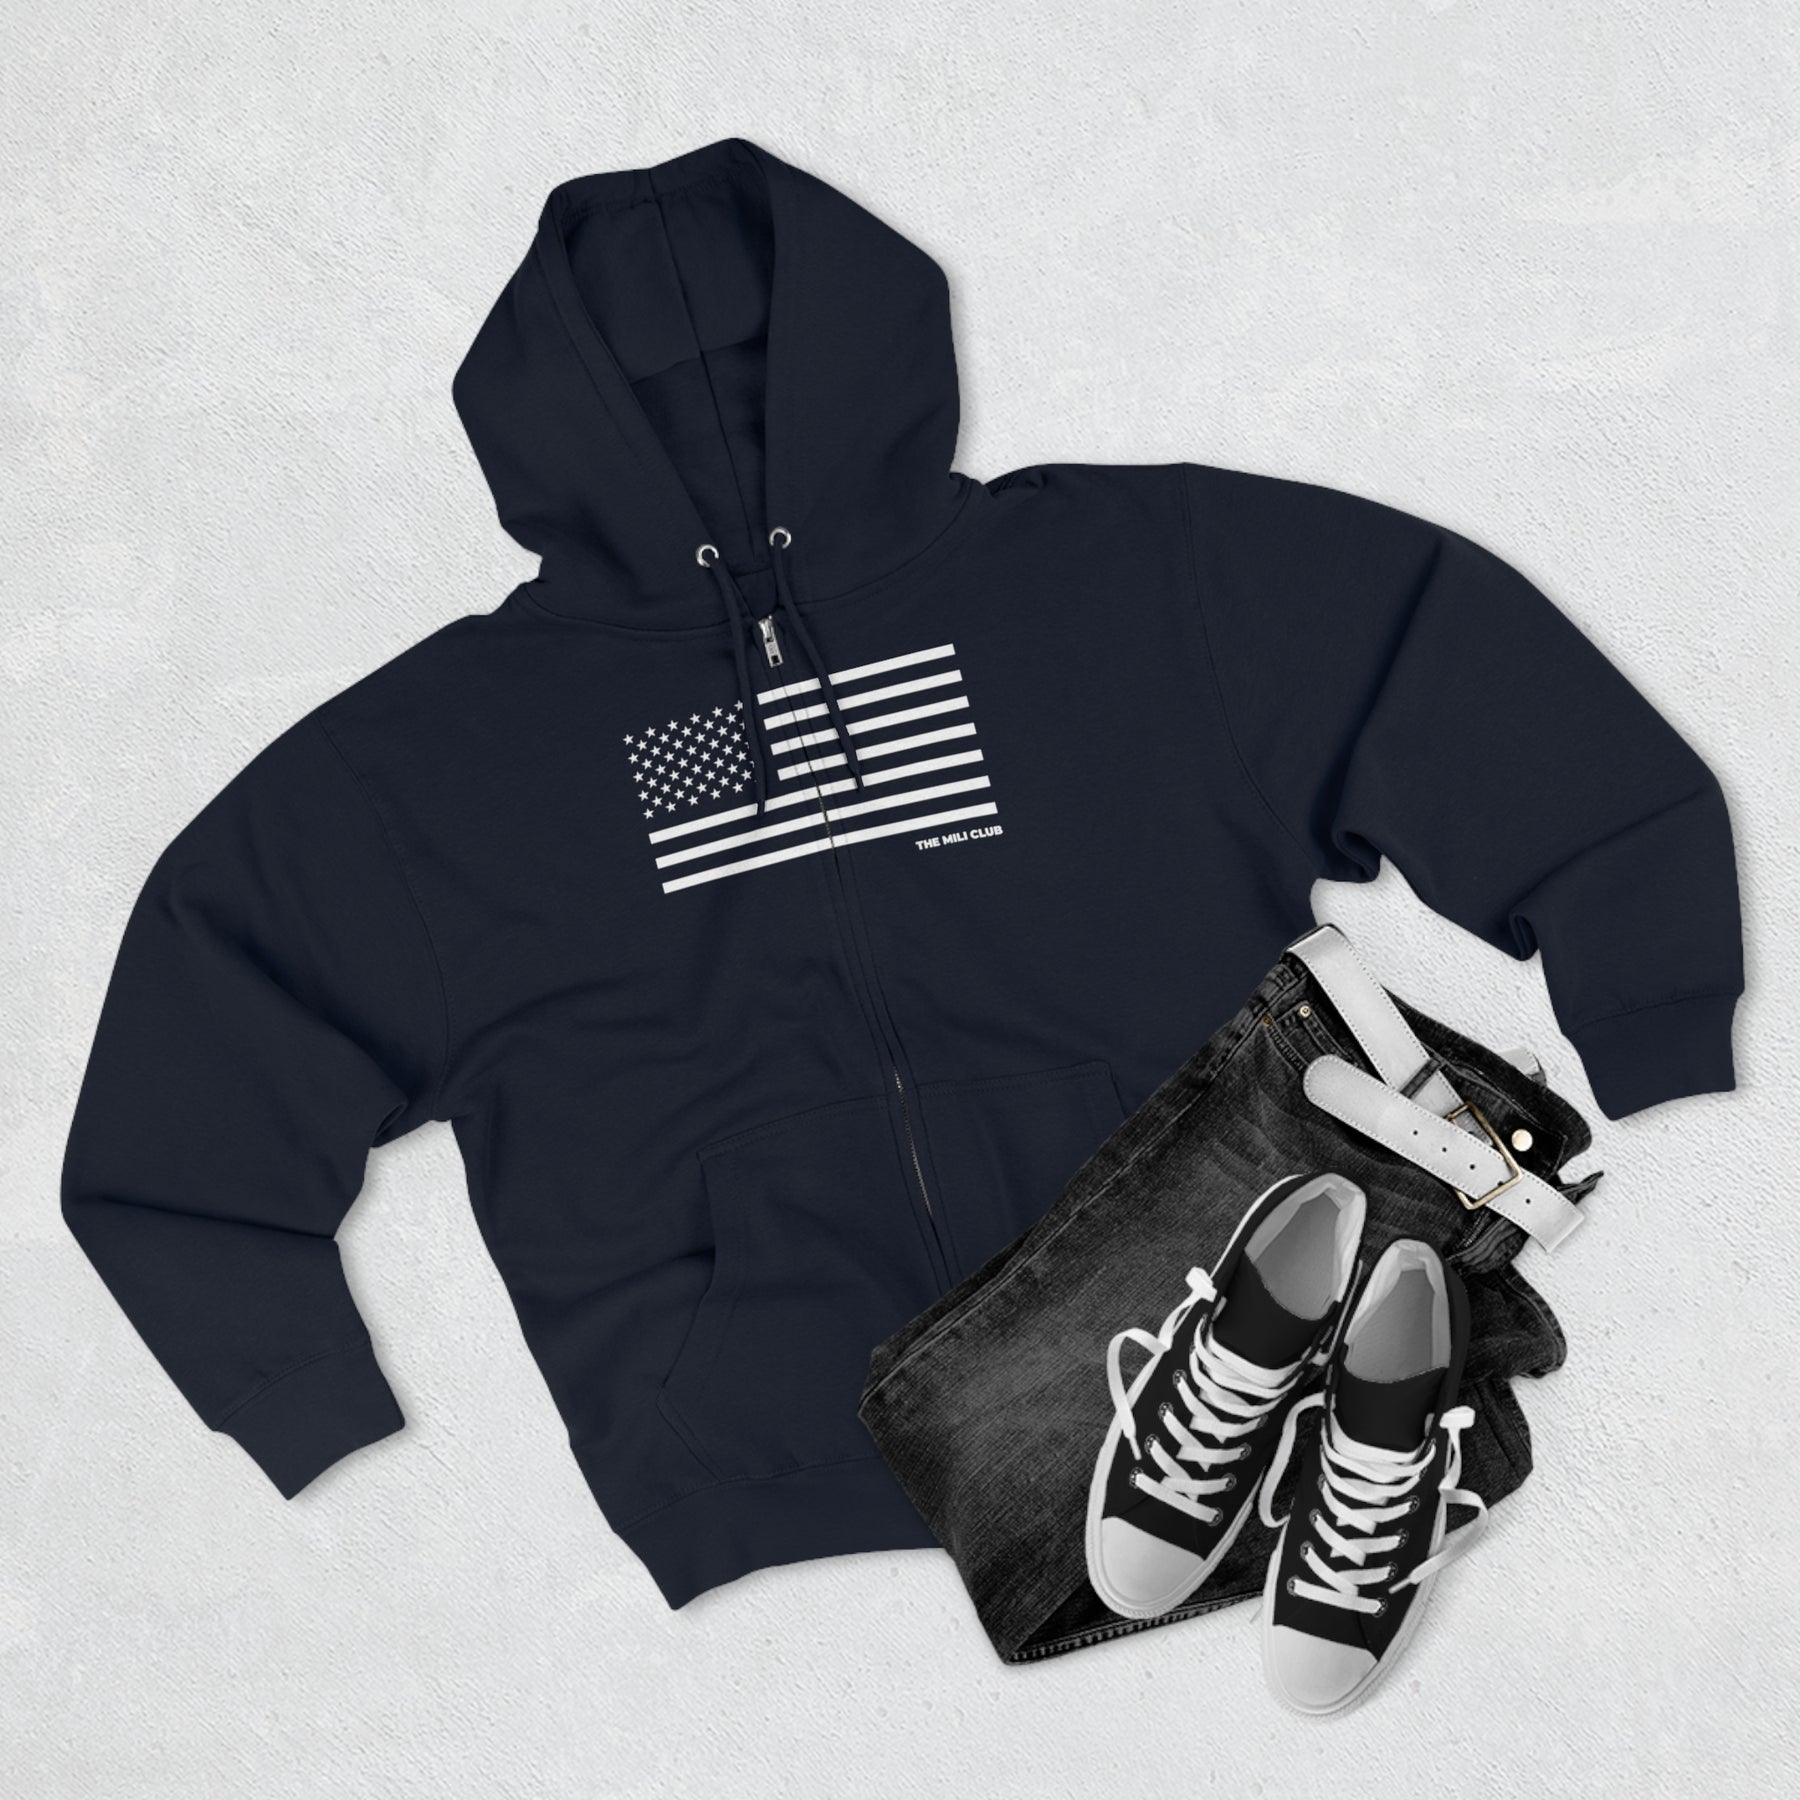 USA Flag - Zip Hoodie